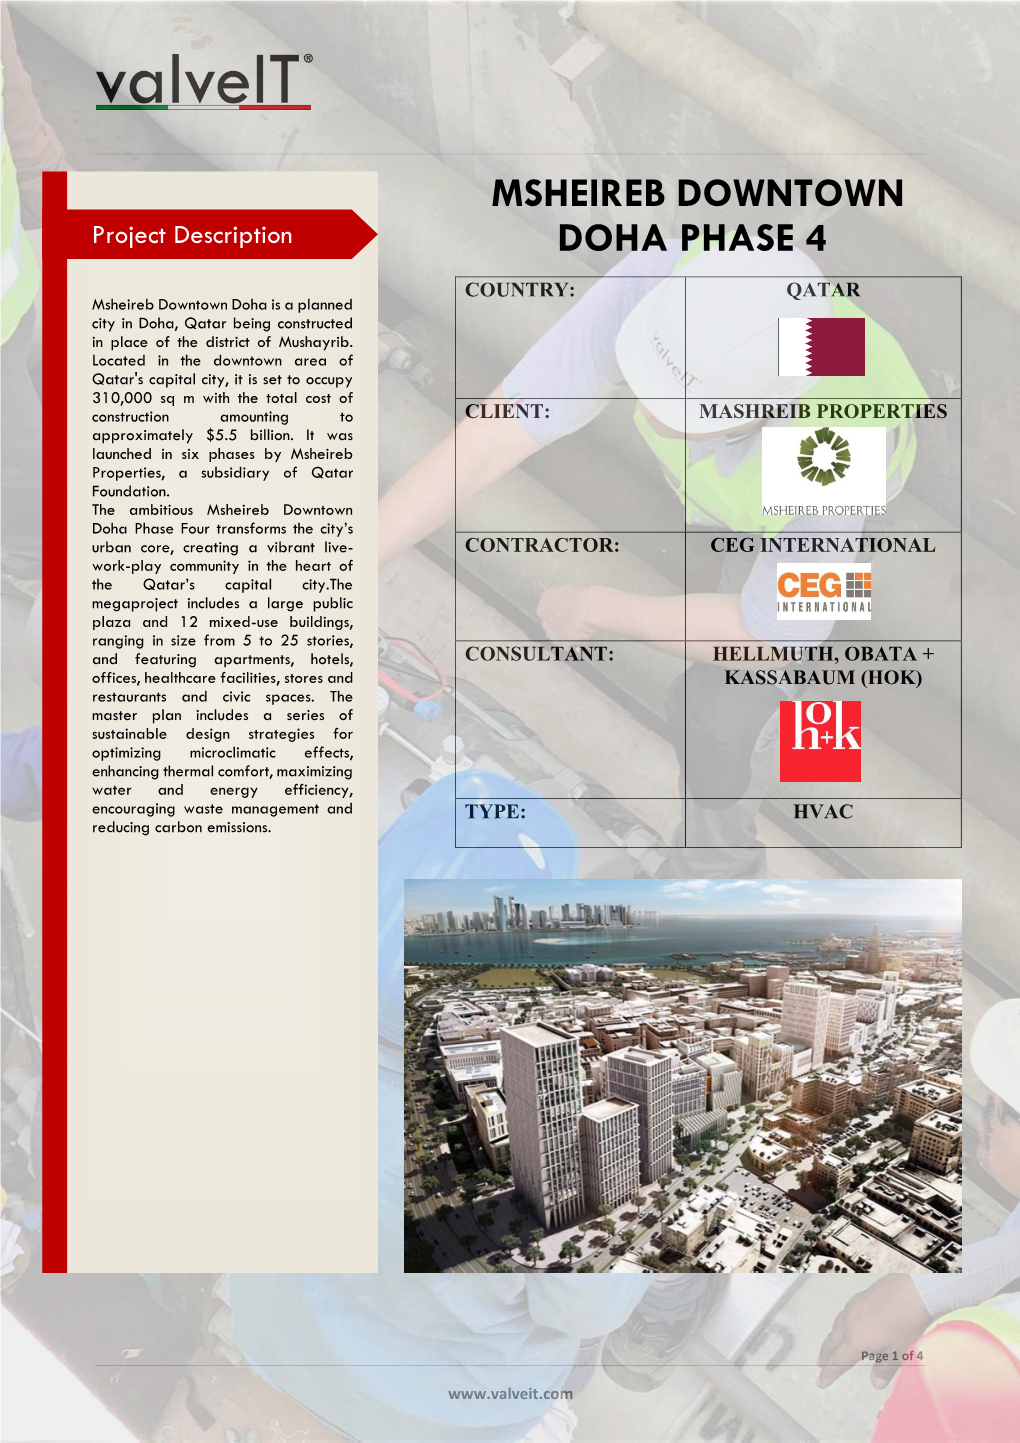 Msheireb Downtown Doha Phase 4